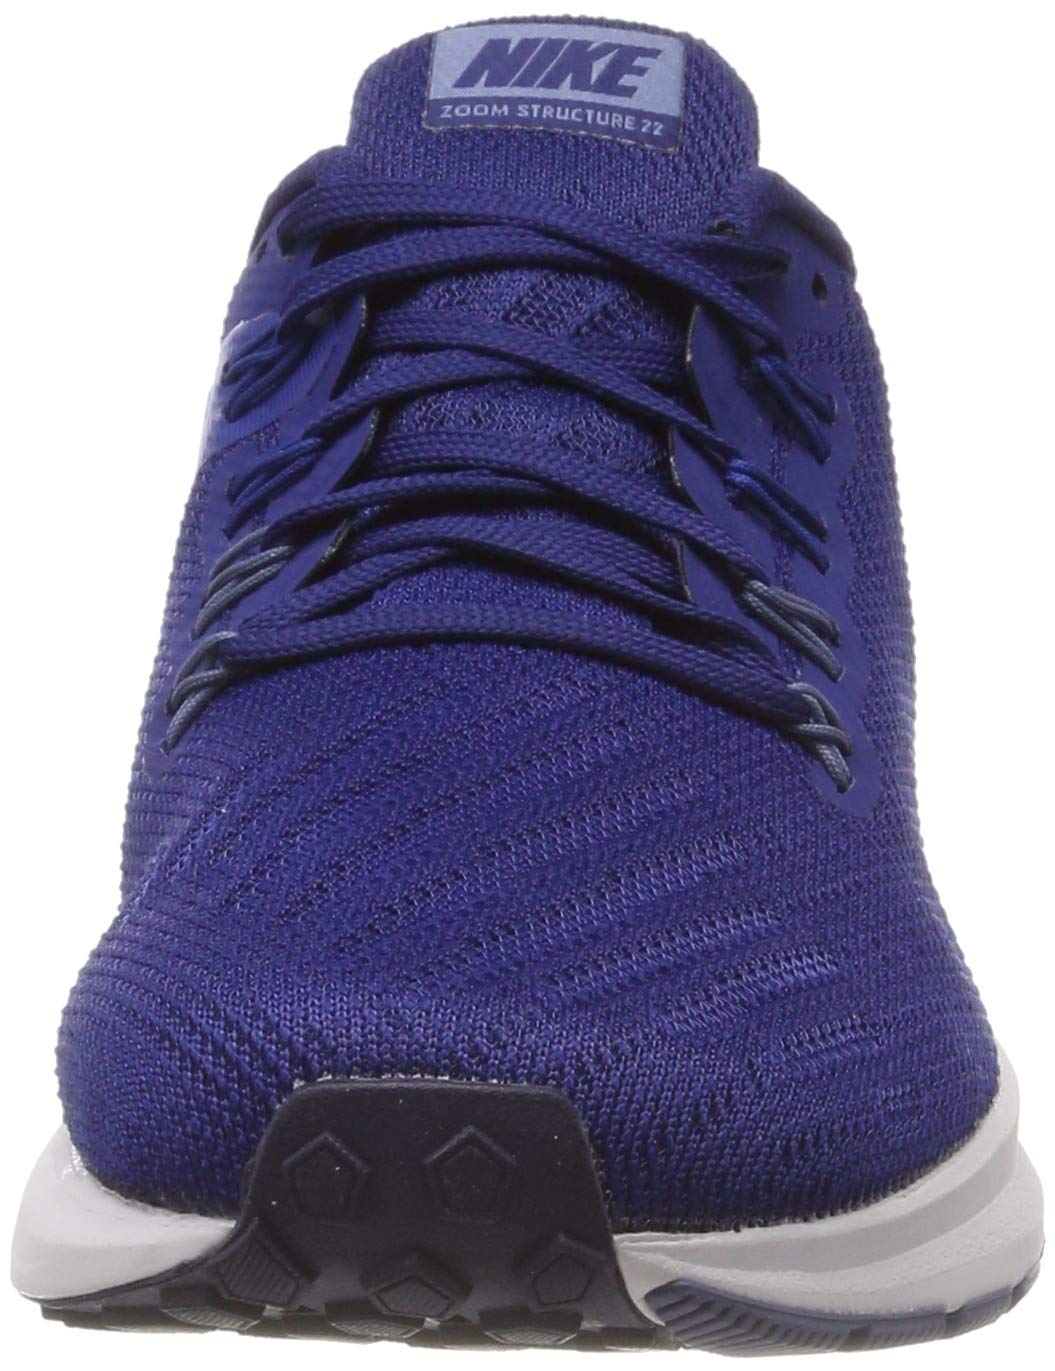 Nike AA1636-404: Men's Air Zoom Structure 22 Blue Void/Vast Grey/Gym Blue Shoe (10.5 D(M) US Men) - image 2 of 7